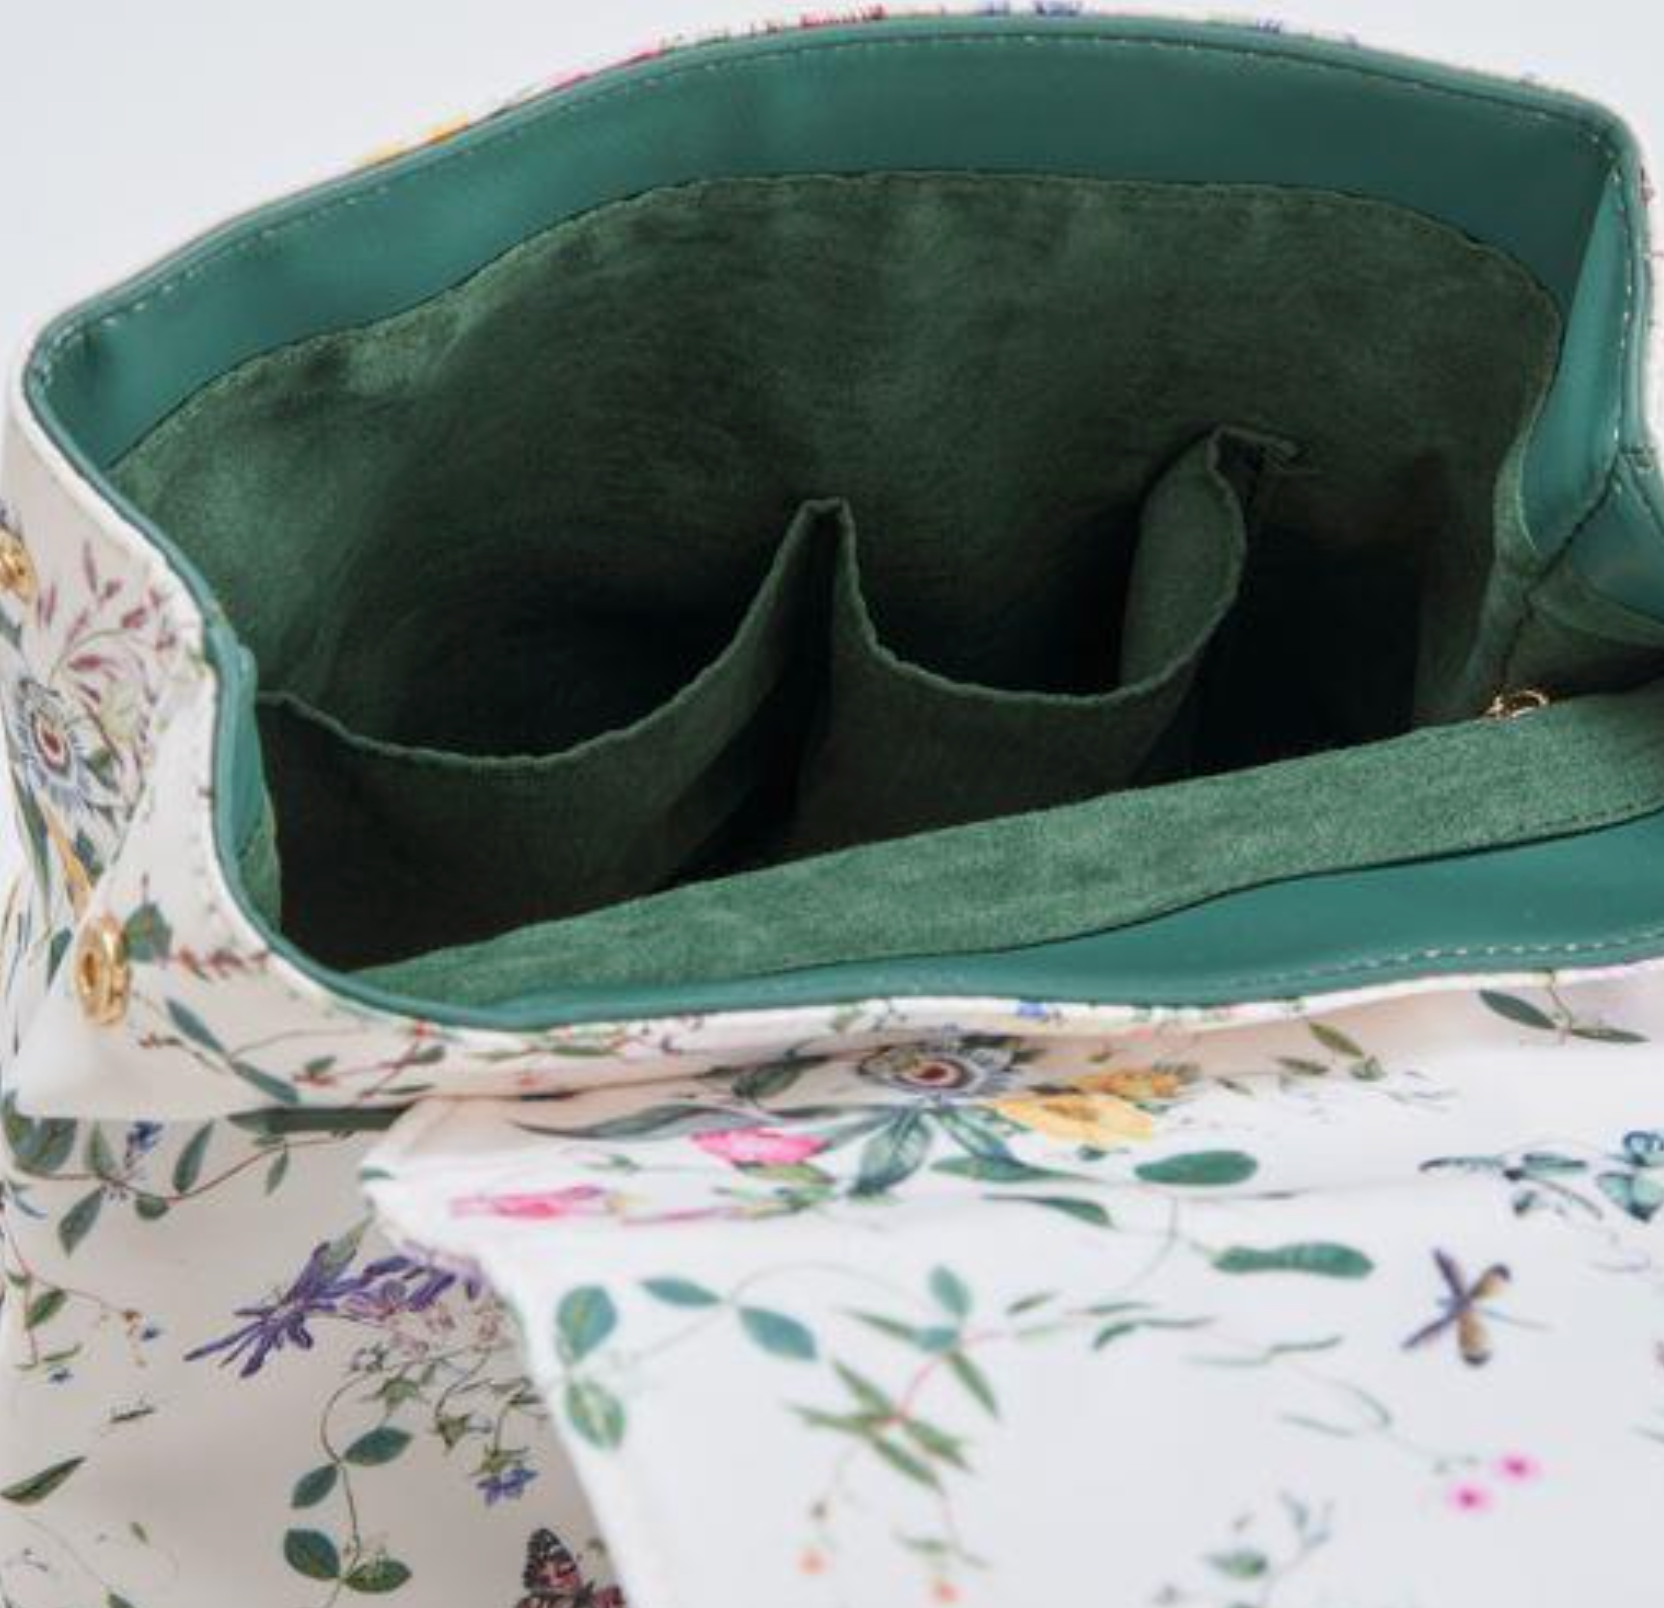 Martha Full Bloom Mini Backpack by Fable England